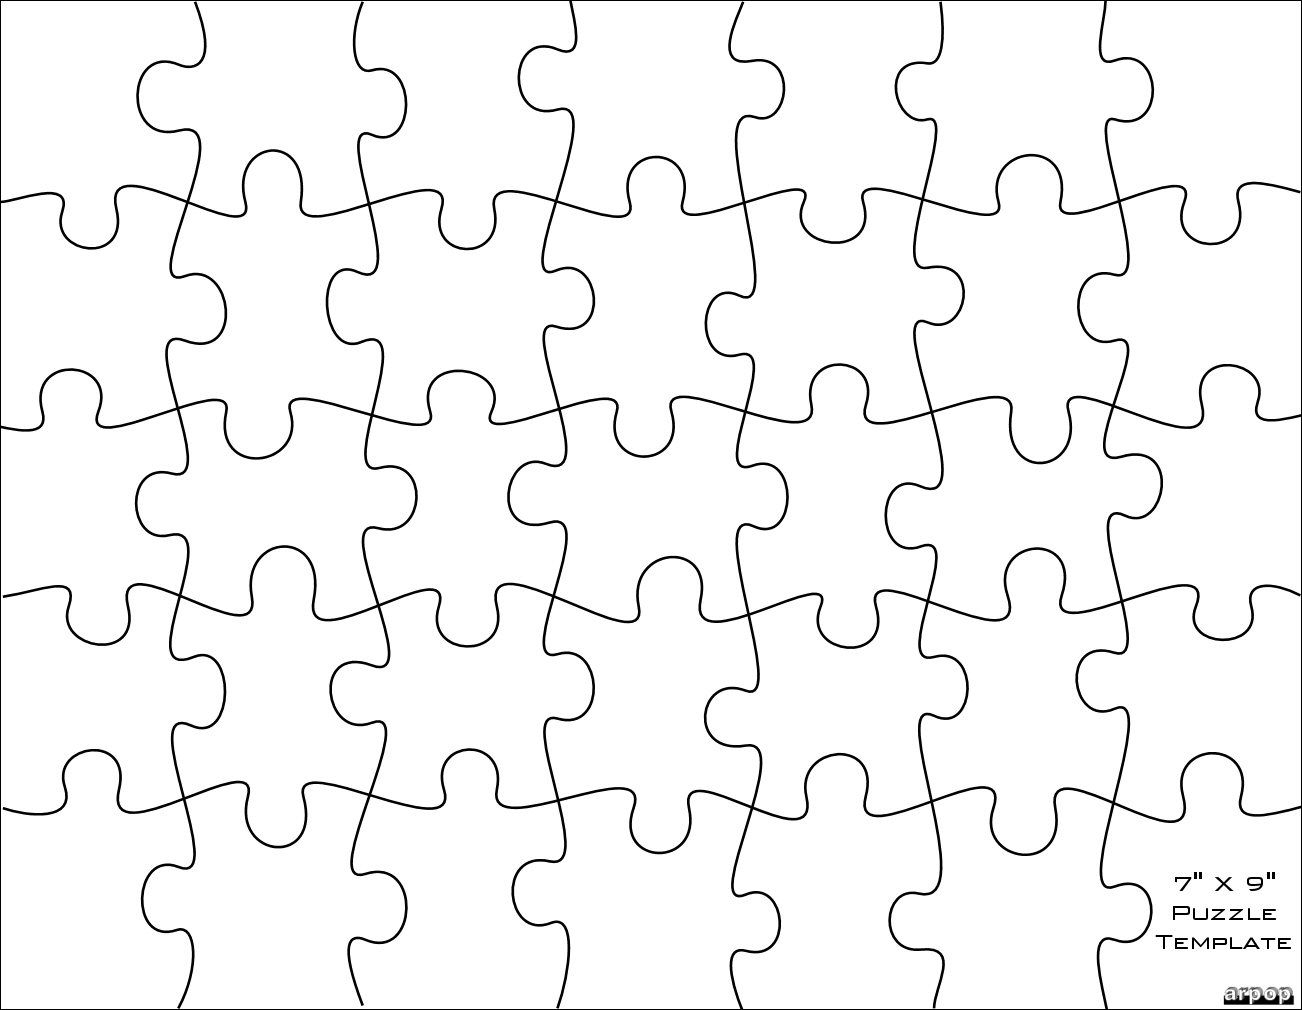 Free Scroll Saw Patternsarpop: Jigsaw Puzzle Templates | School - Printable Jigsaw Puzzles Maker